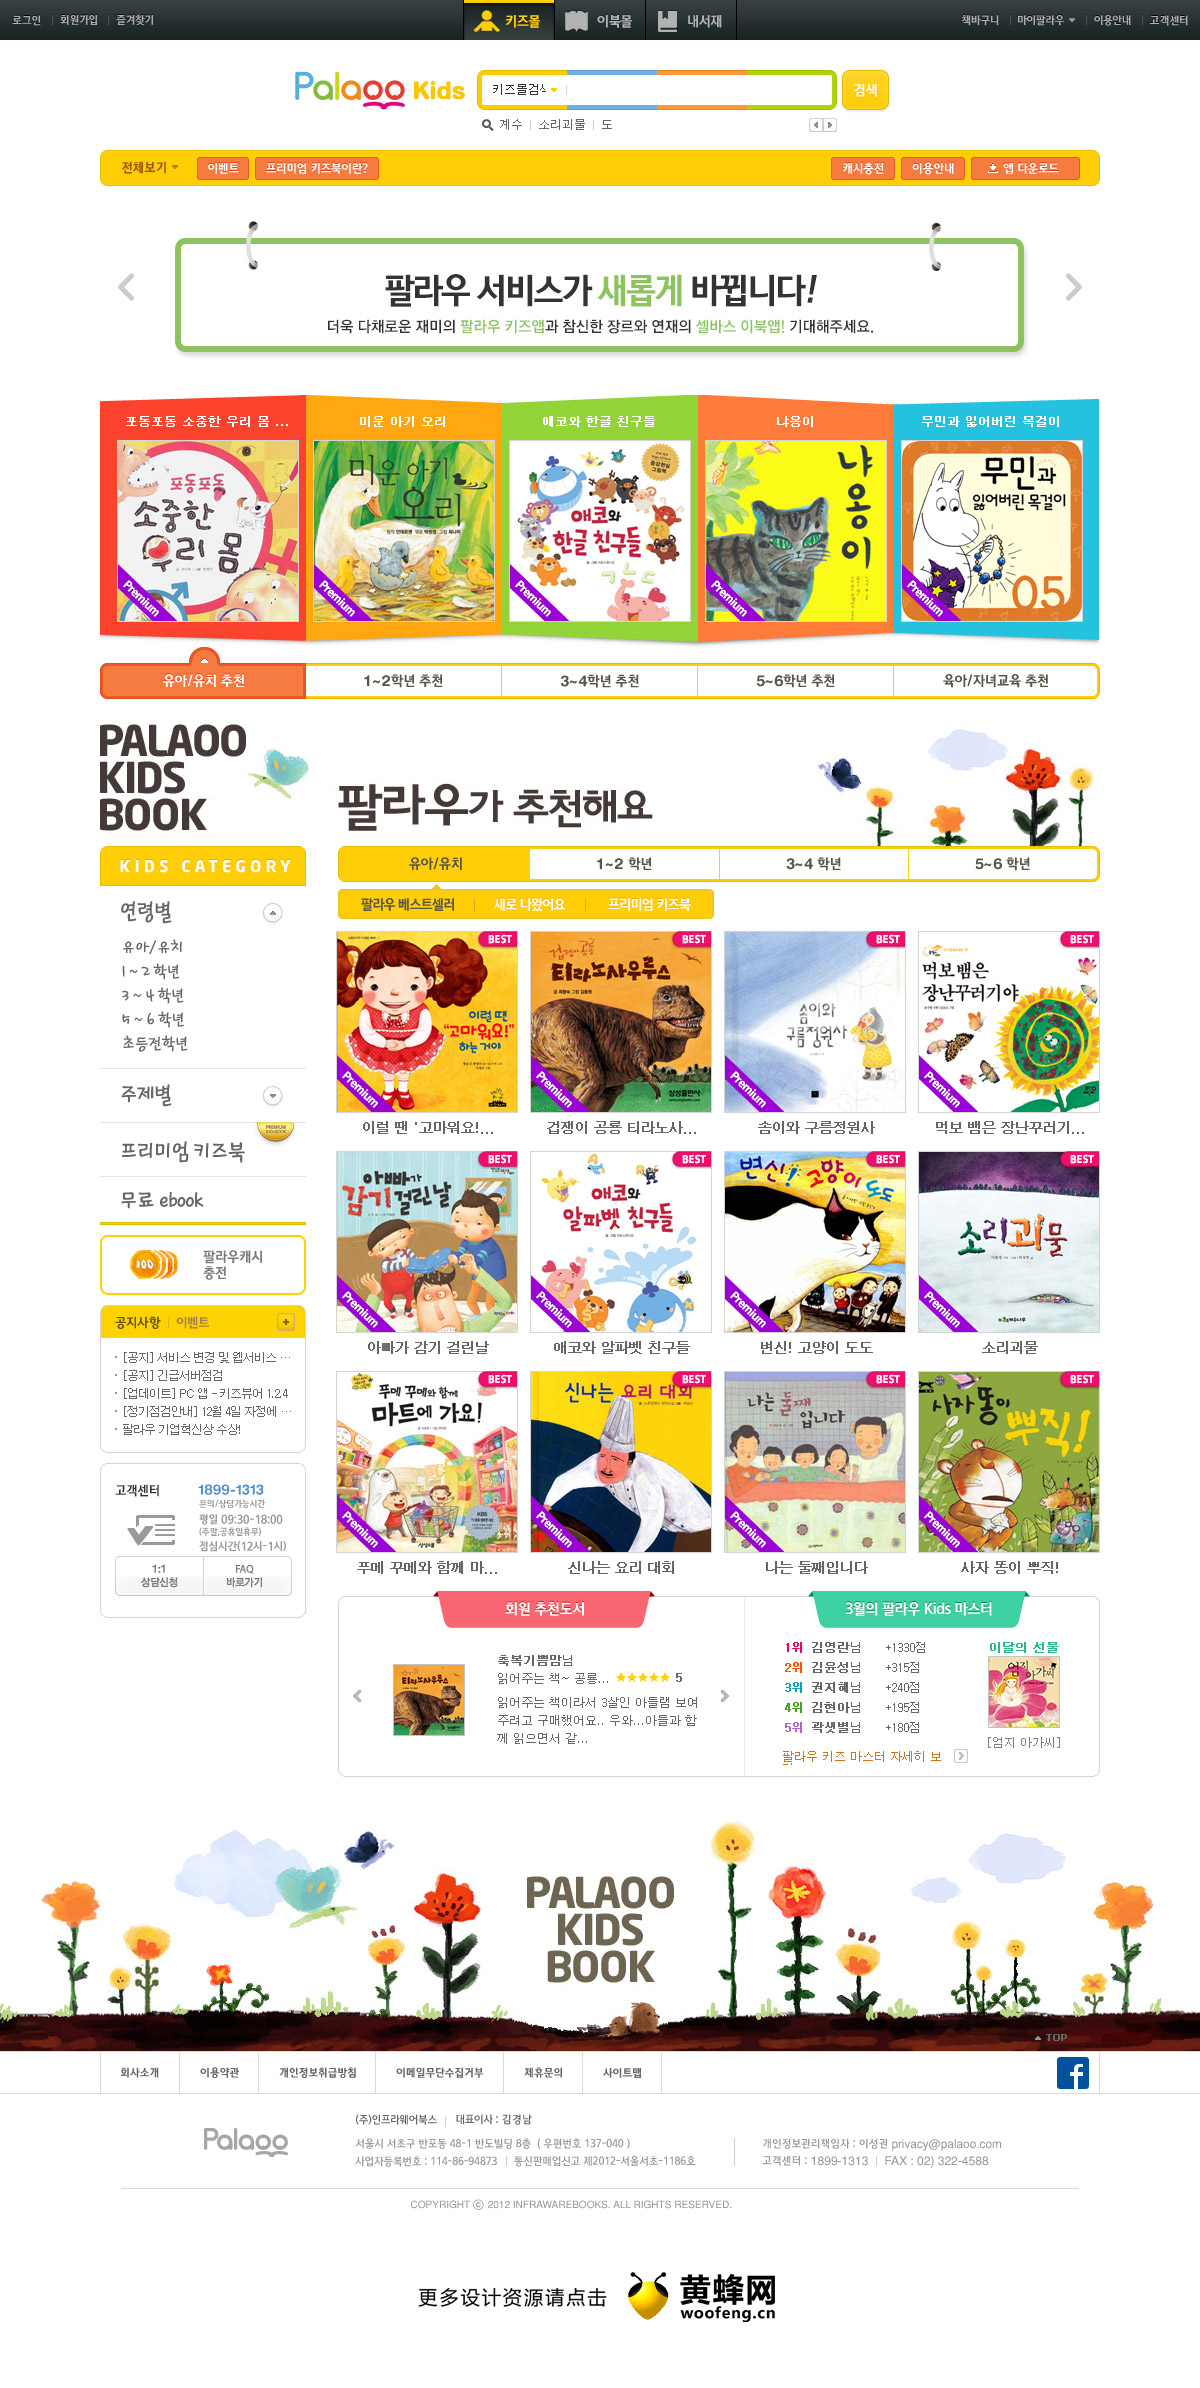 palaoo kids喜欢在书的世界，来源自黄蜂网https://woofeng.cn/web/